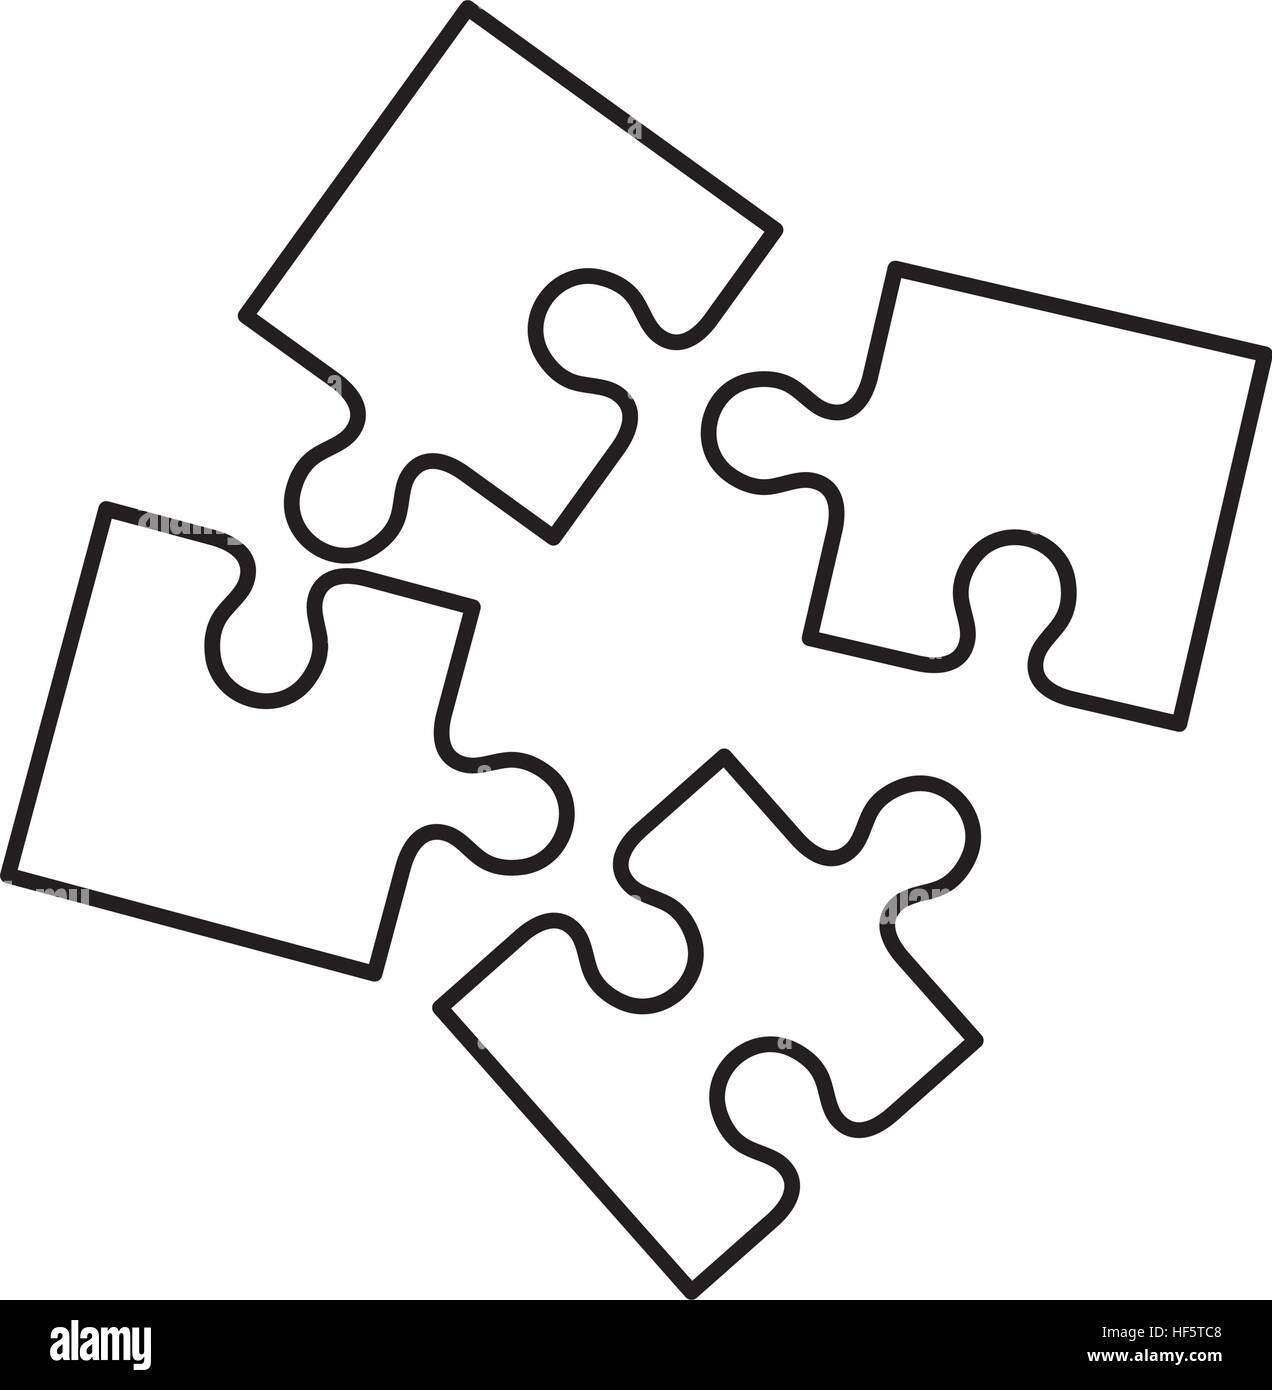 Puzzle-Teile Konzept Symbol Vektor Illustration Grafik-design  Stock-Vektorgrafik - Alamy